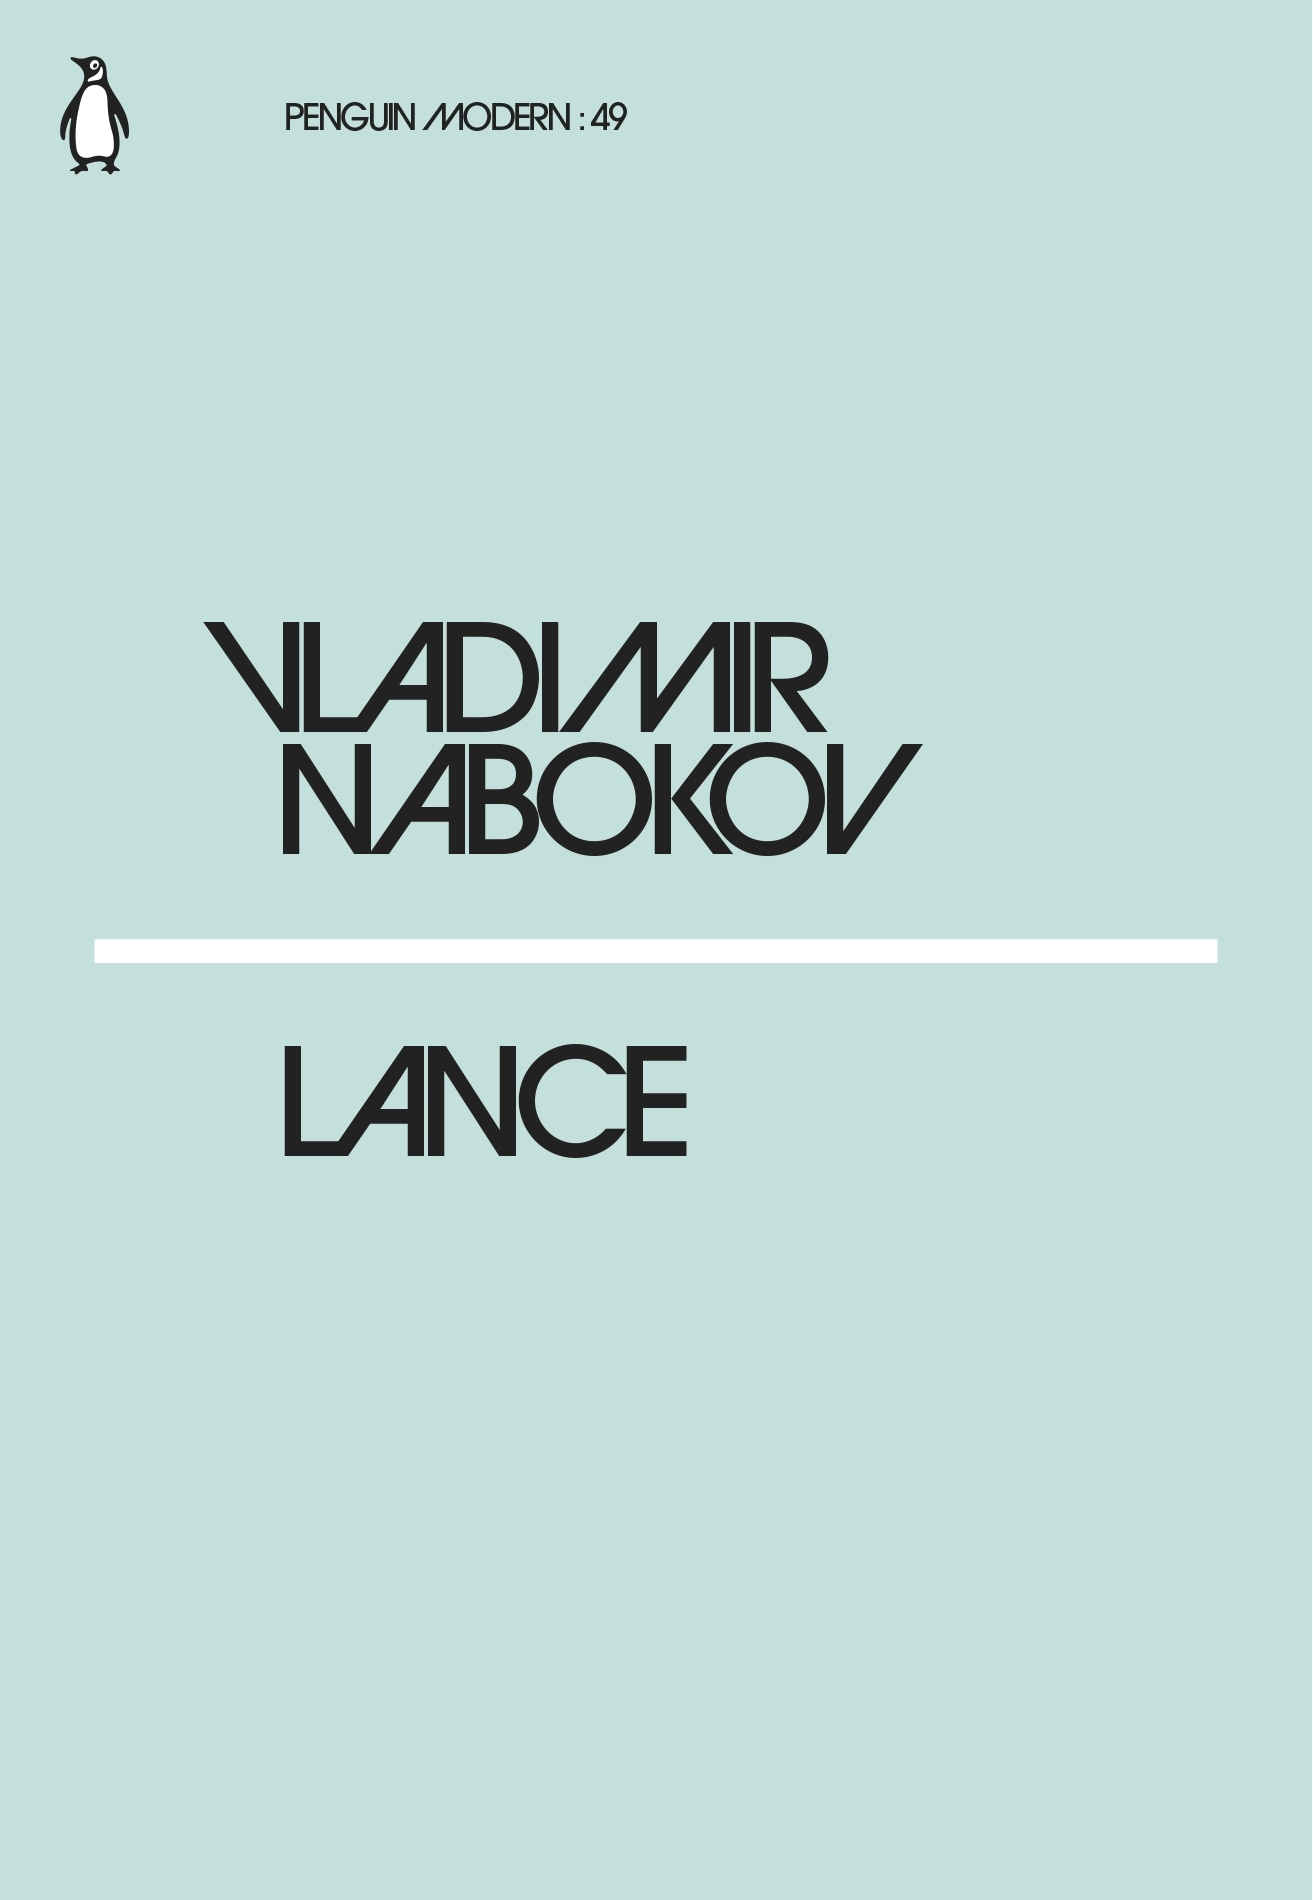 Book “Lance” by Vladimir Nabokov — February 22, 2018